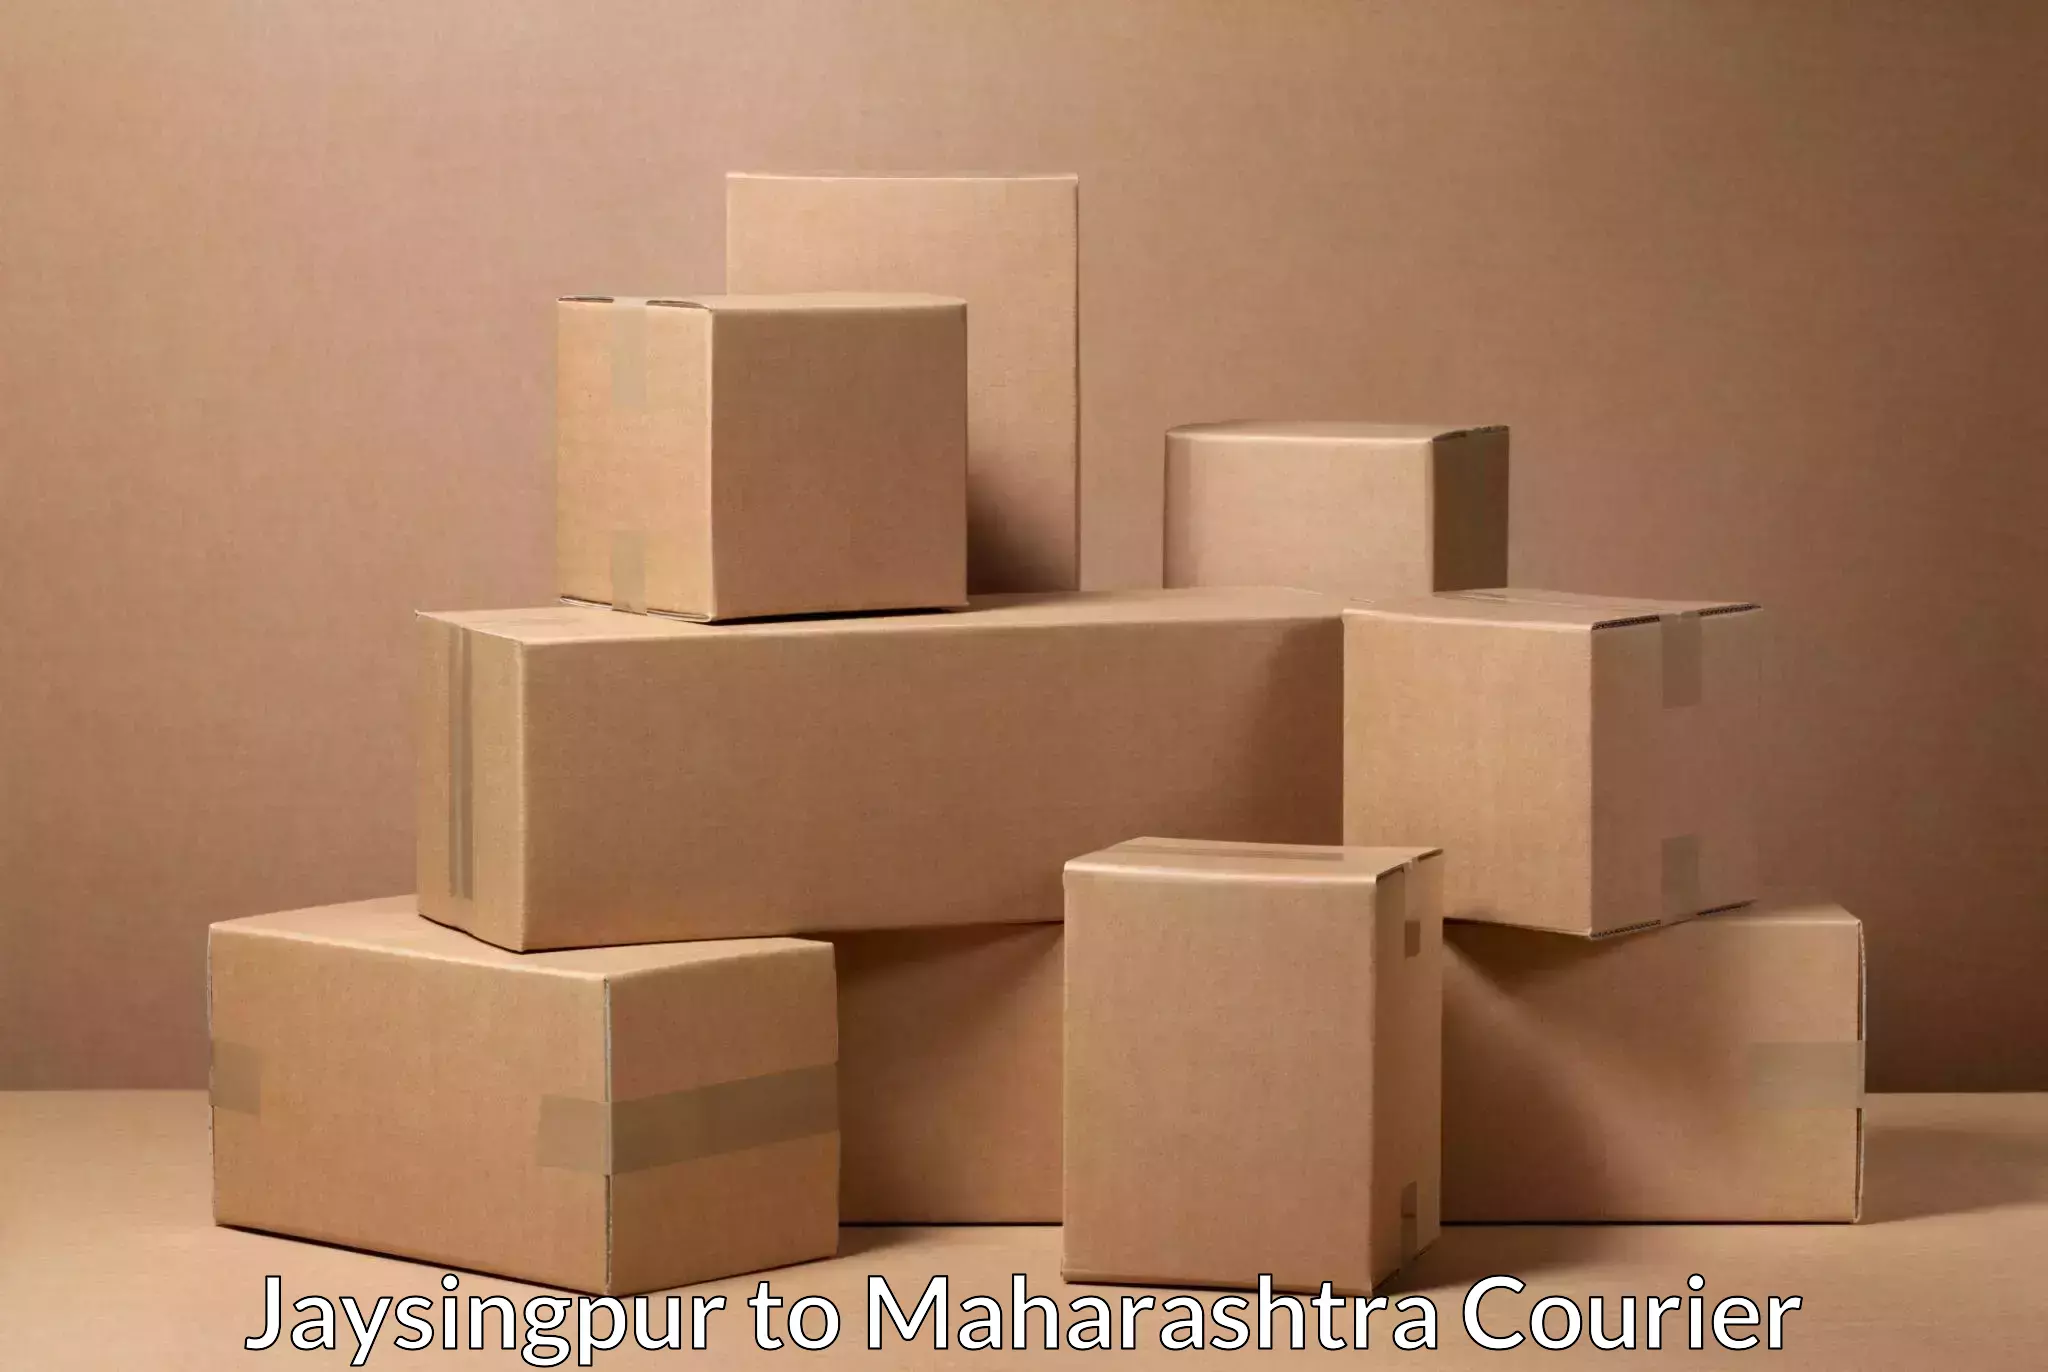 Next-day delivery options Jaysingpur to Kalyan Dombivli